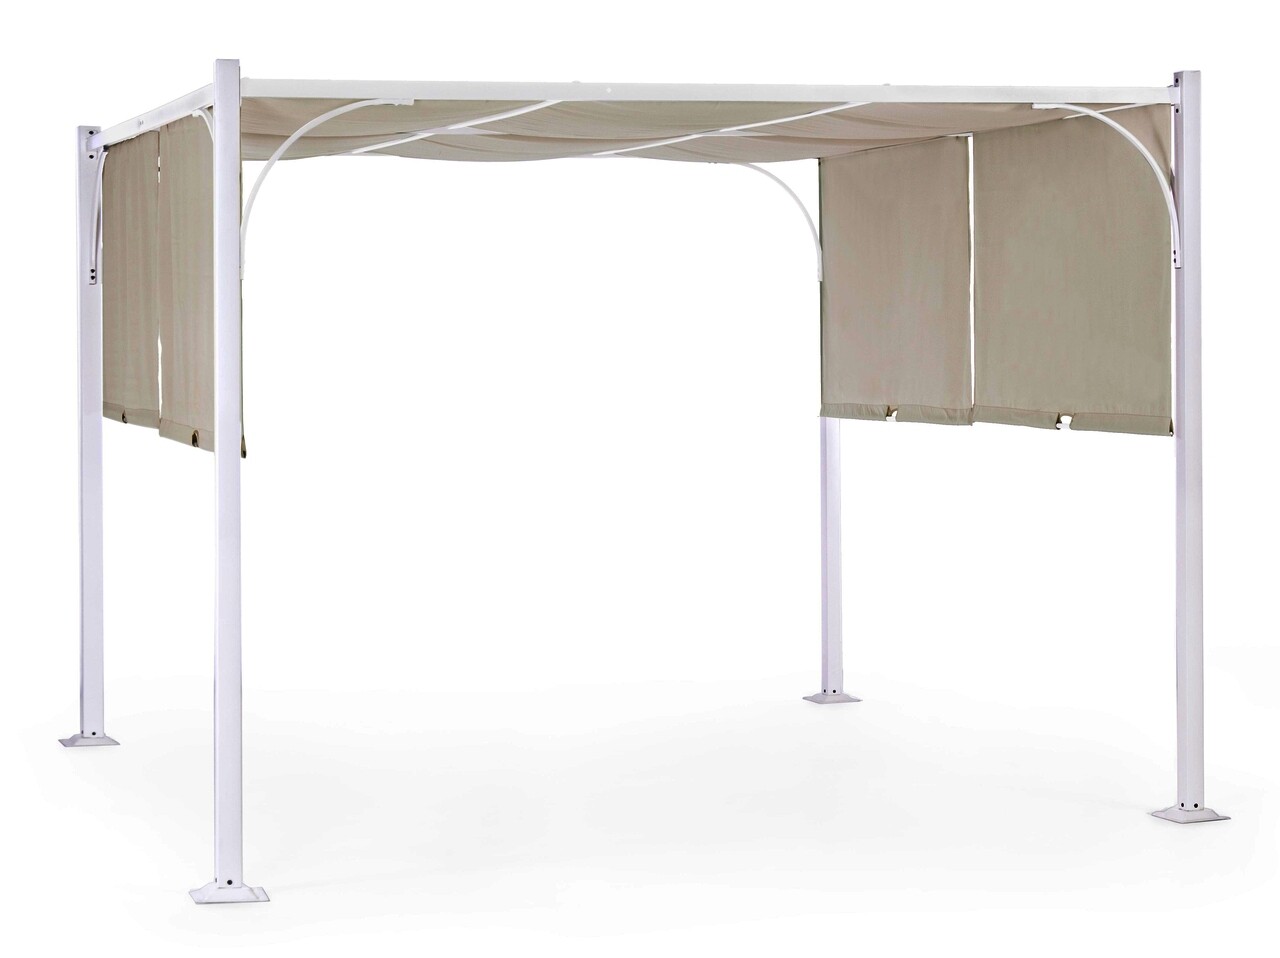 Pavilion pentru gadina Slide Gazebo, Bizzotto, 300 x 300 cm, otel/poliester/poliamida, alb/grej